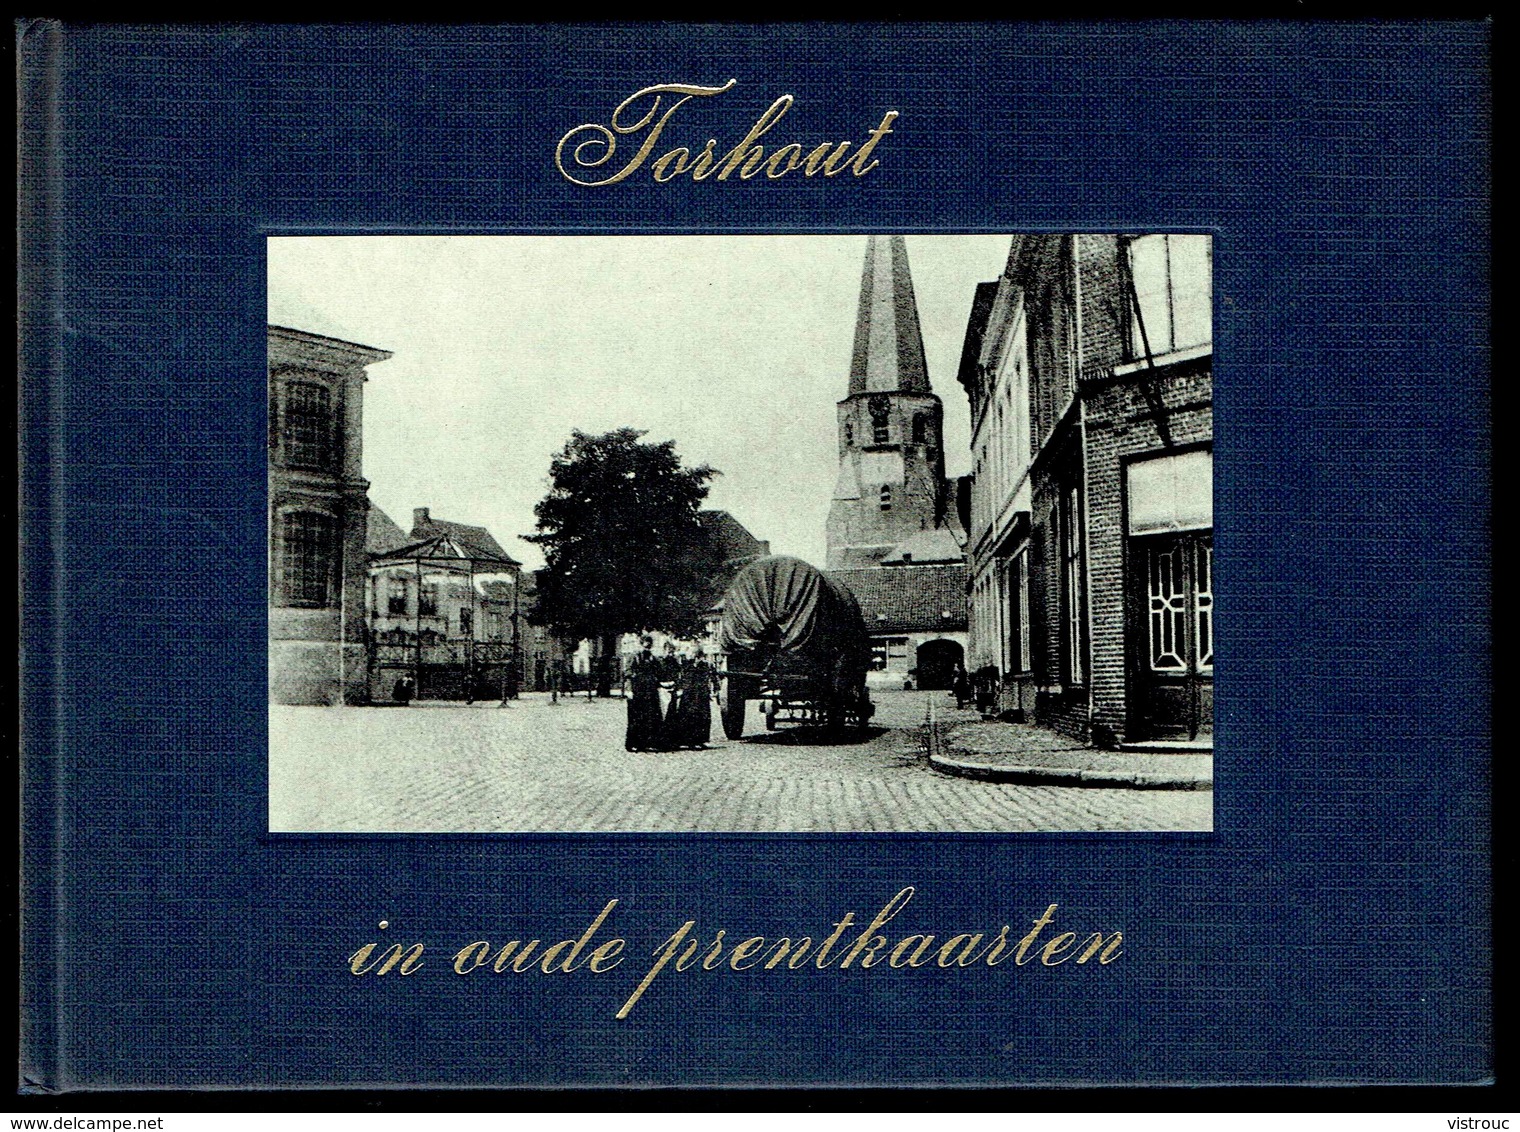 TORHOUT In Oude Prentkaarten - Edition Bibliothèque Européenne, Zaltbommel - 1972 - 3 Scans. - Livres & Catalogues